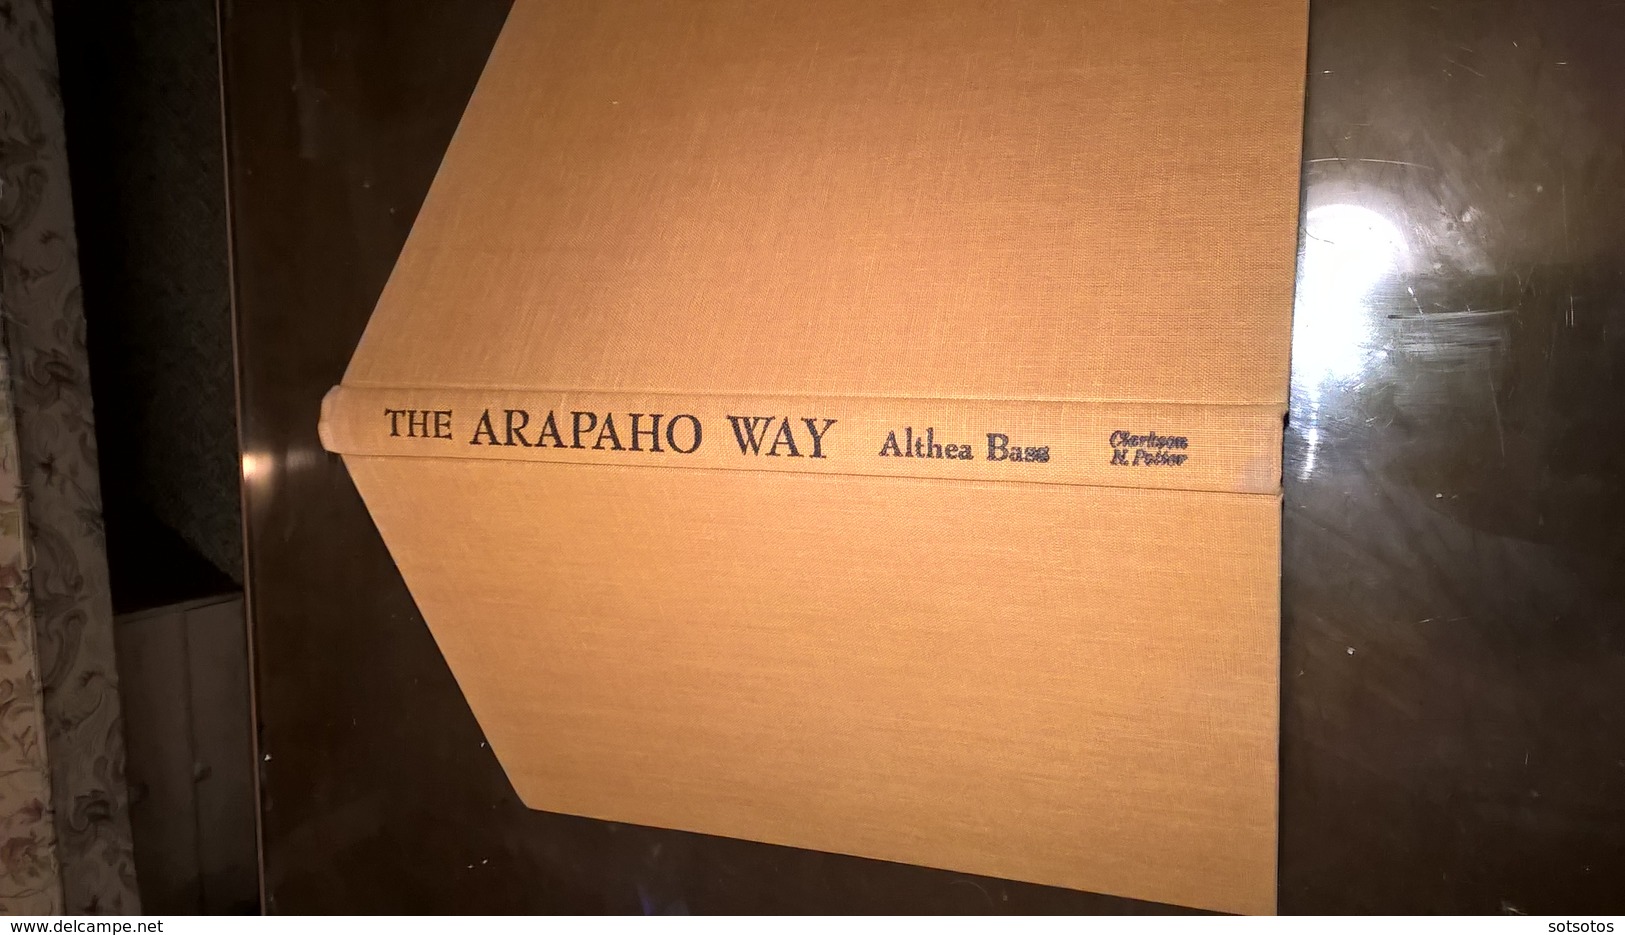 The ARAPAHO Way, A Memoir Of An Indian Boyhood: Althea BASS, Ed. Clarcson/Potter (1967), 22 Illustrations In Full Color - Mondo